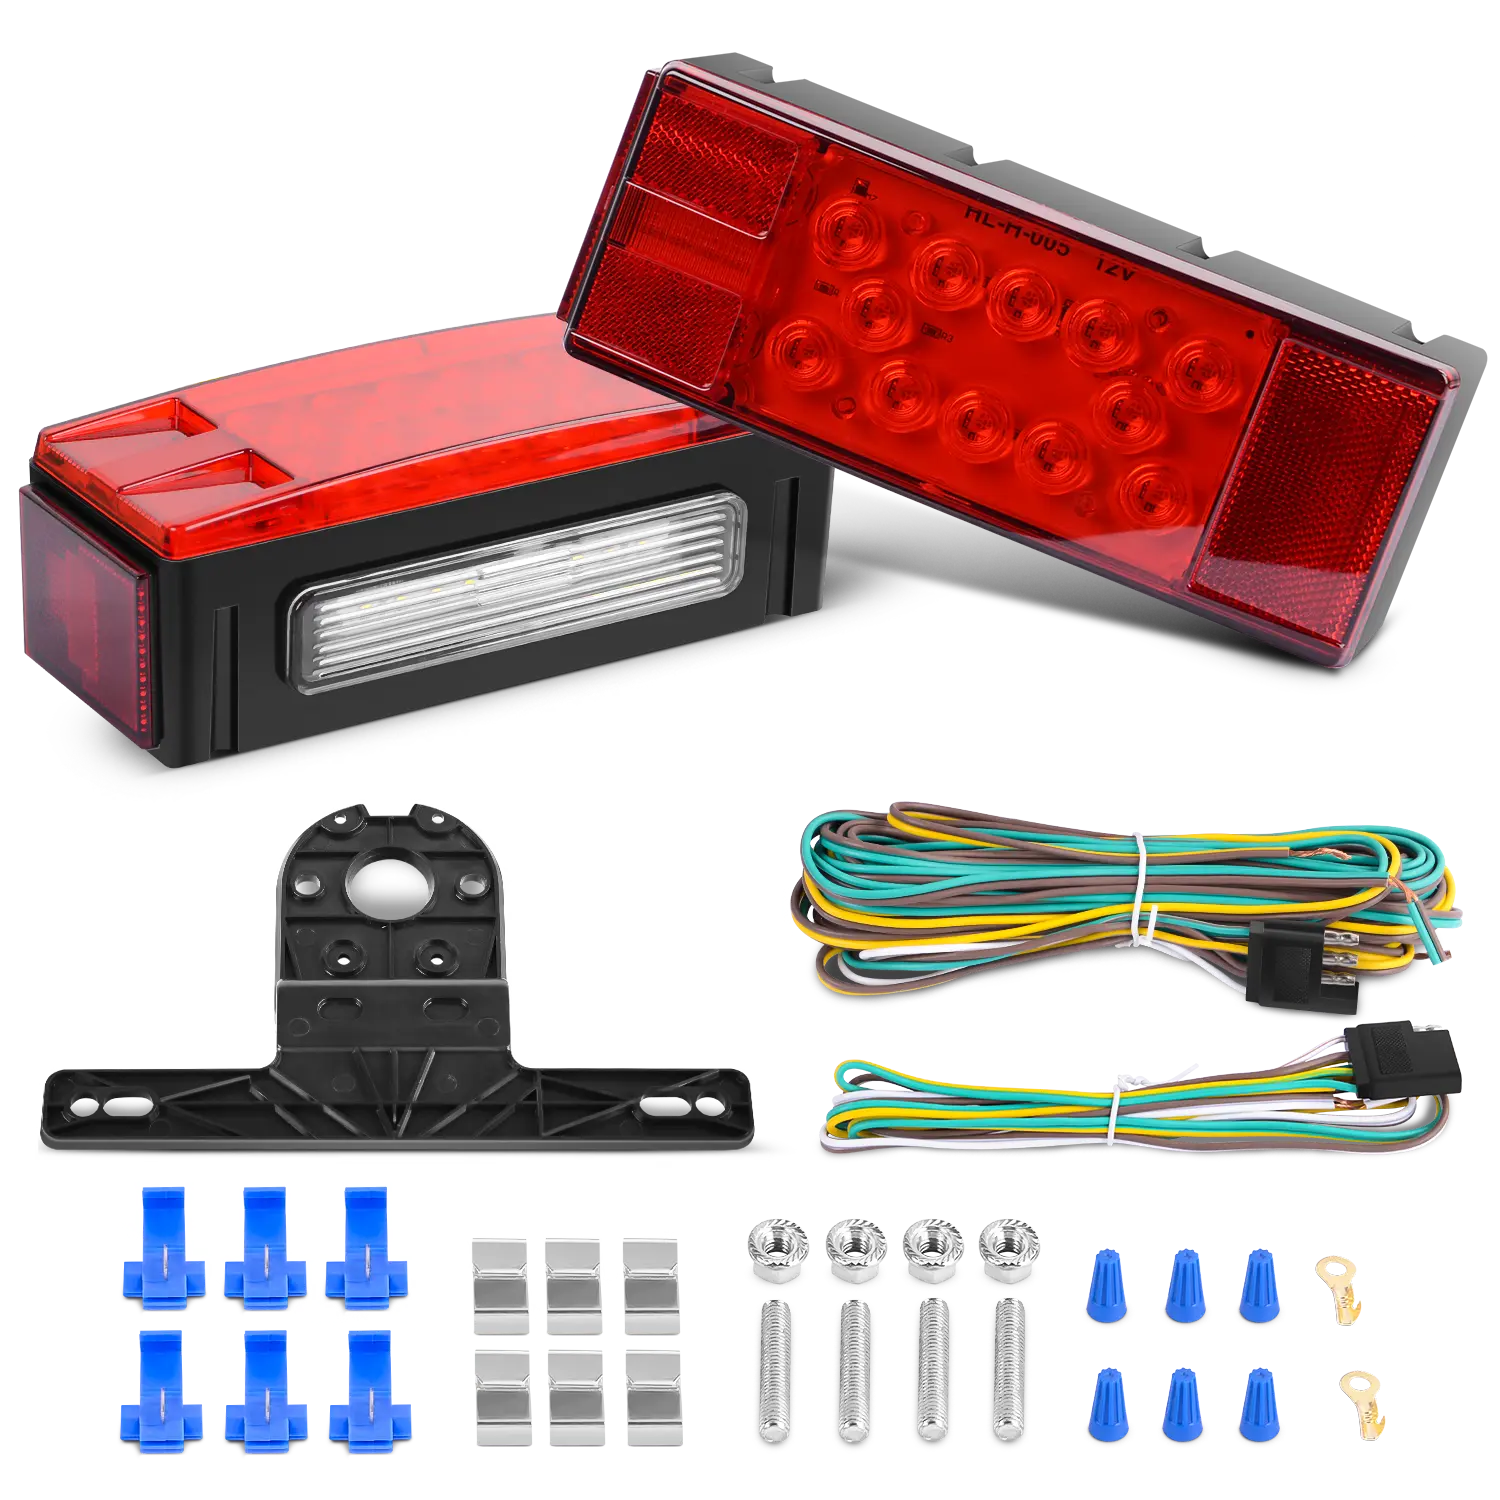 Trailer Light Submersible Low Profile Rectangular LED Trailer Light Kit (Pair)